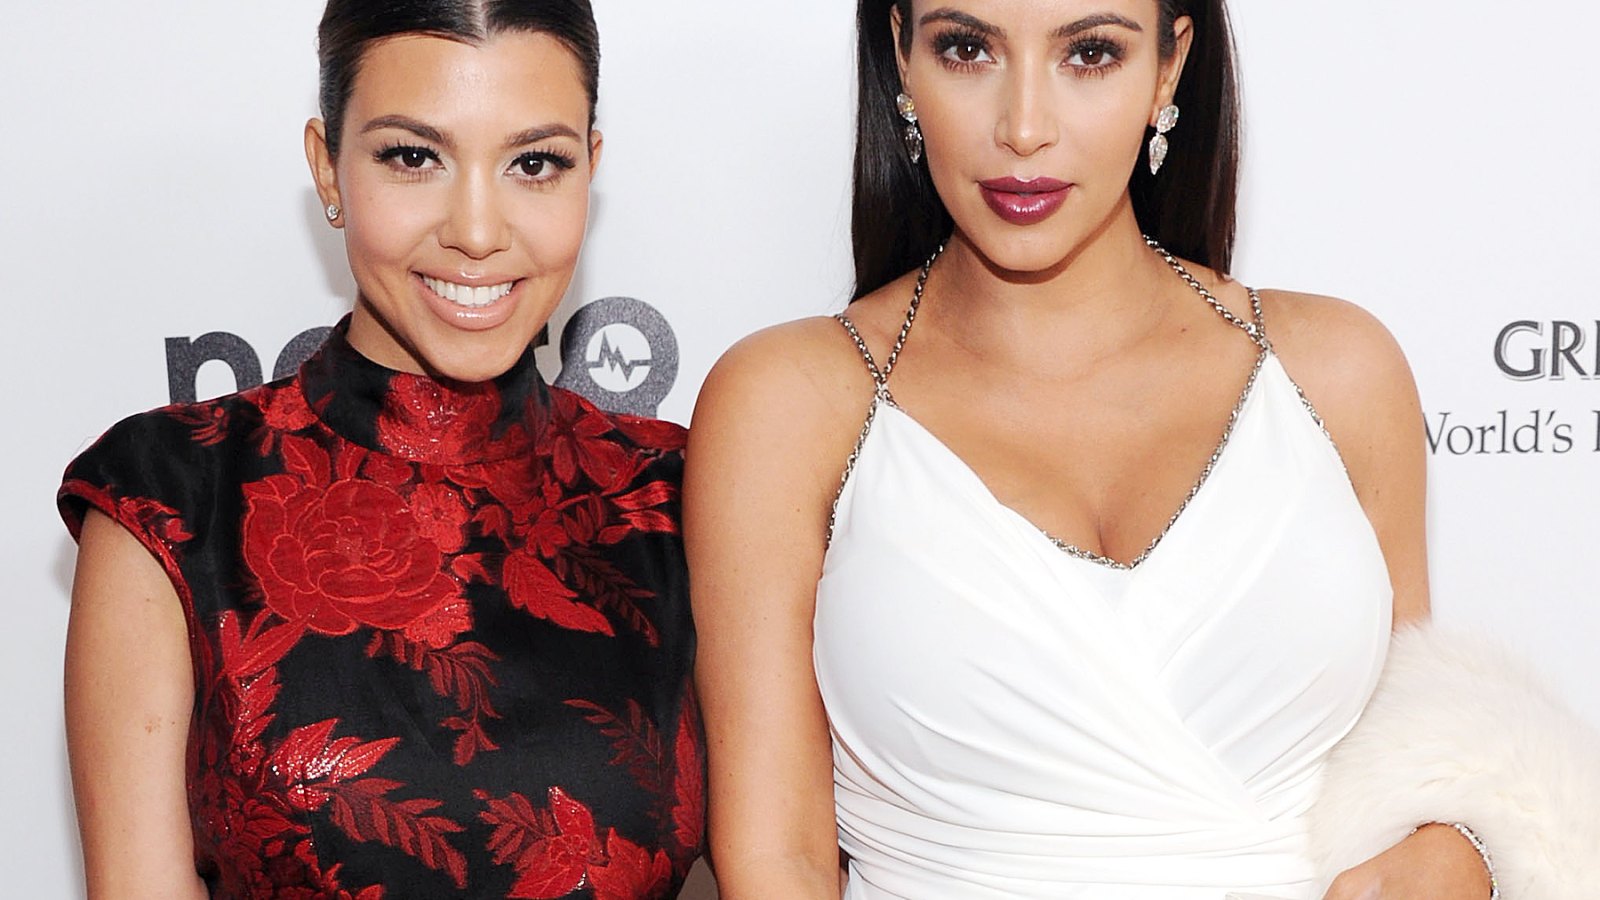 Kourtney Kardashian and Kim Kardashian on February 24, 2013